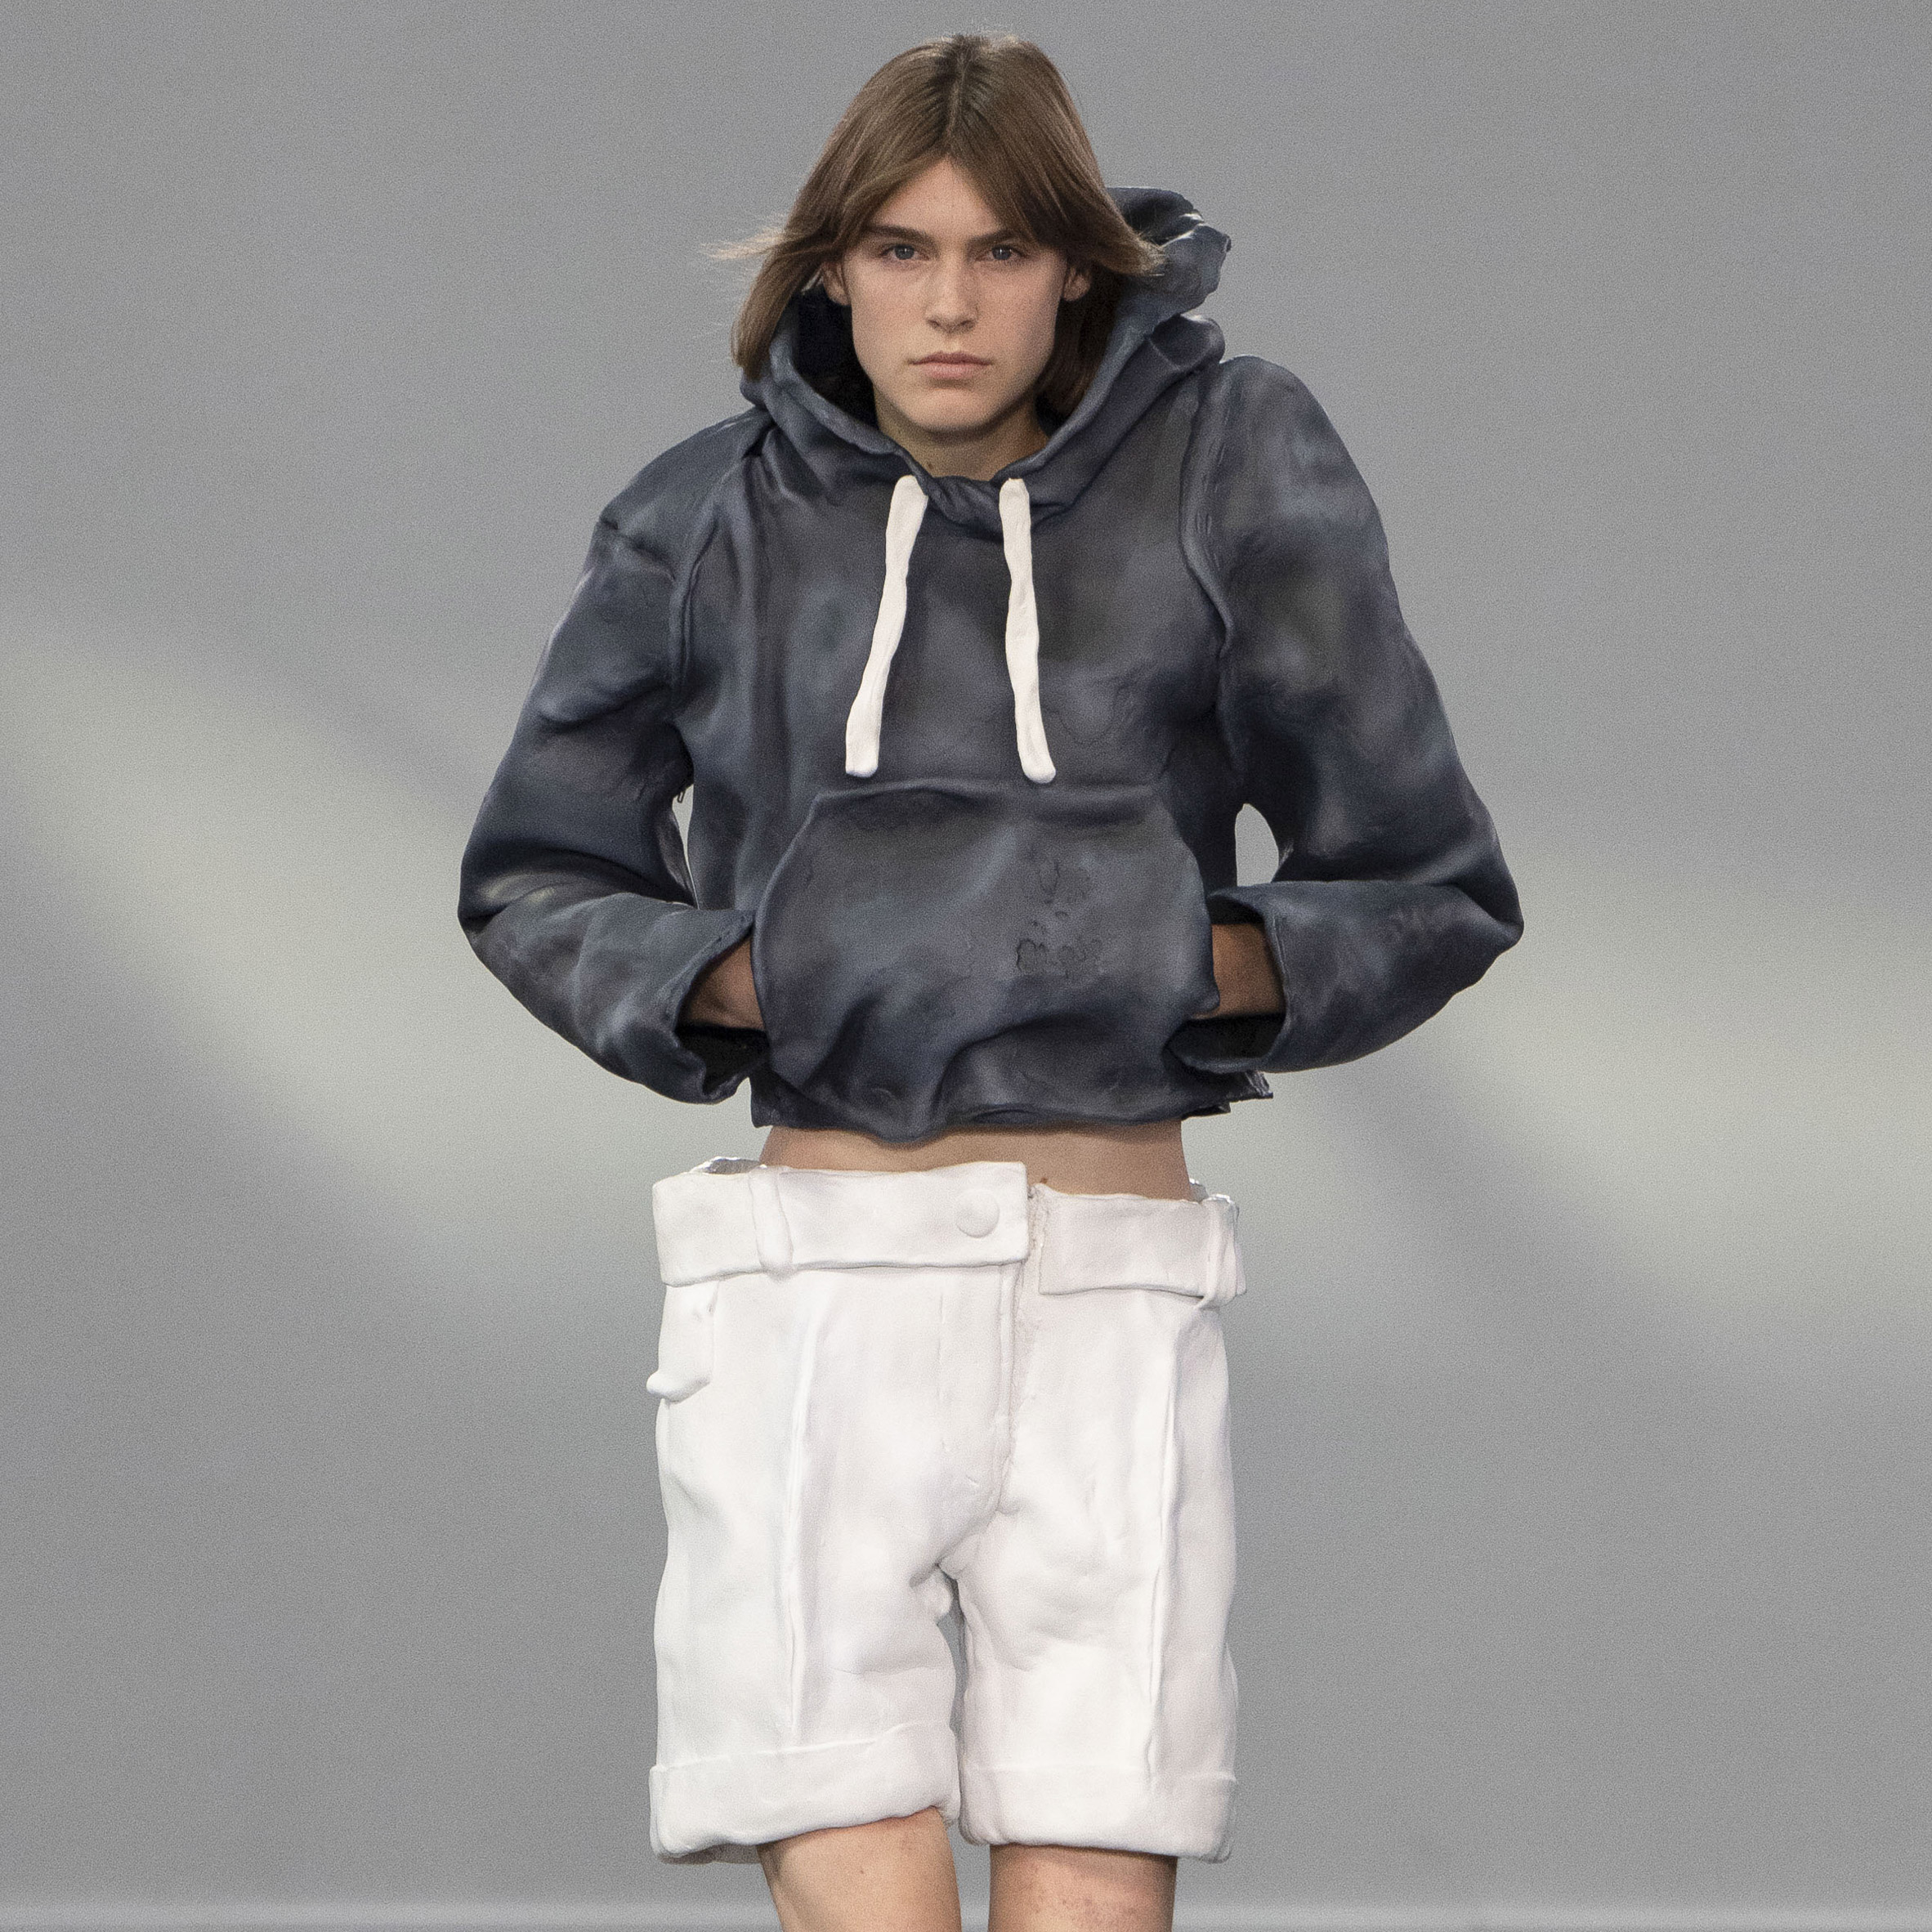 NEW Louis Vuitton Fashion Hoodies For Men-14  Louis vuitton clothing,  Hoodie fashion, Hoodies men